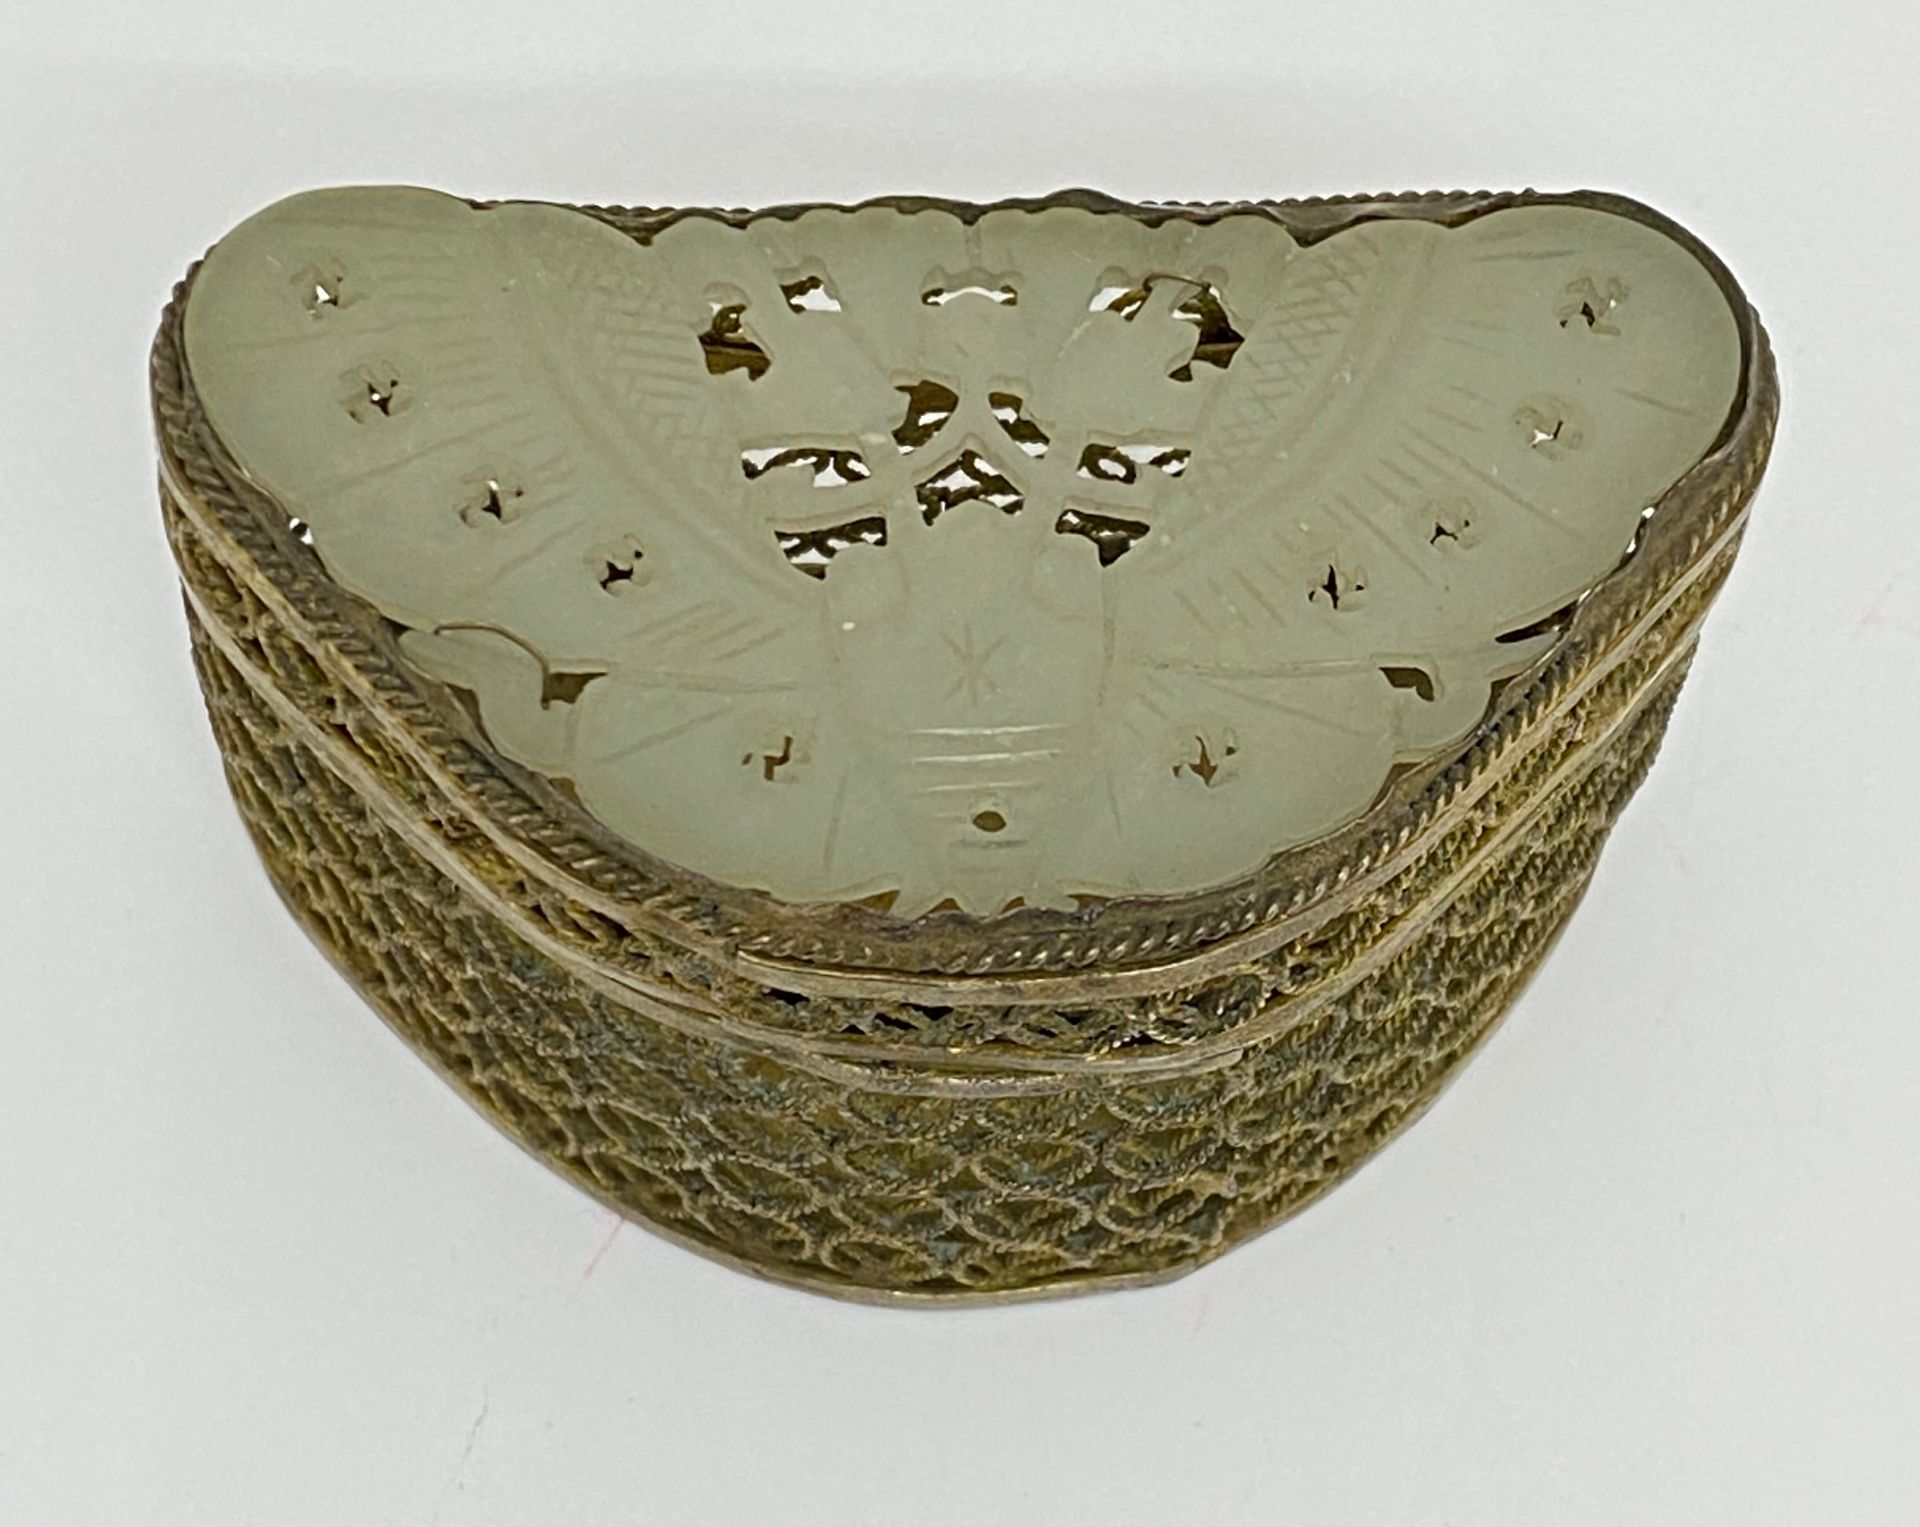 Null 中国

镂空的小铜盒，盒盖上装饰着一个玉盘。

尺寸：4,5 x 7 x 4厘米